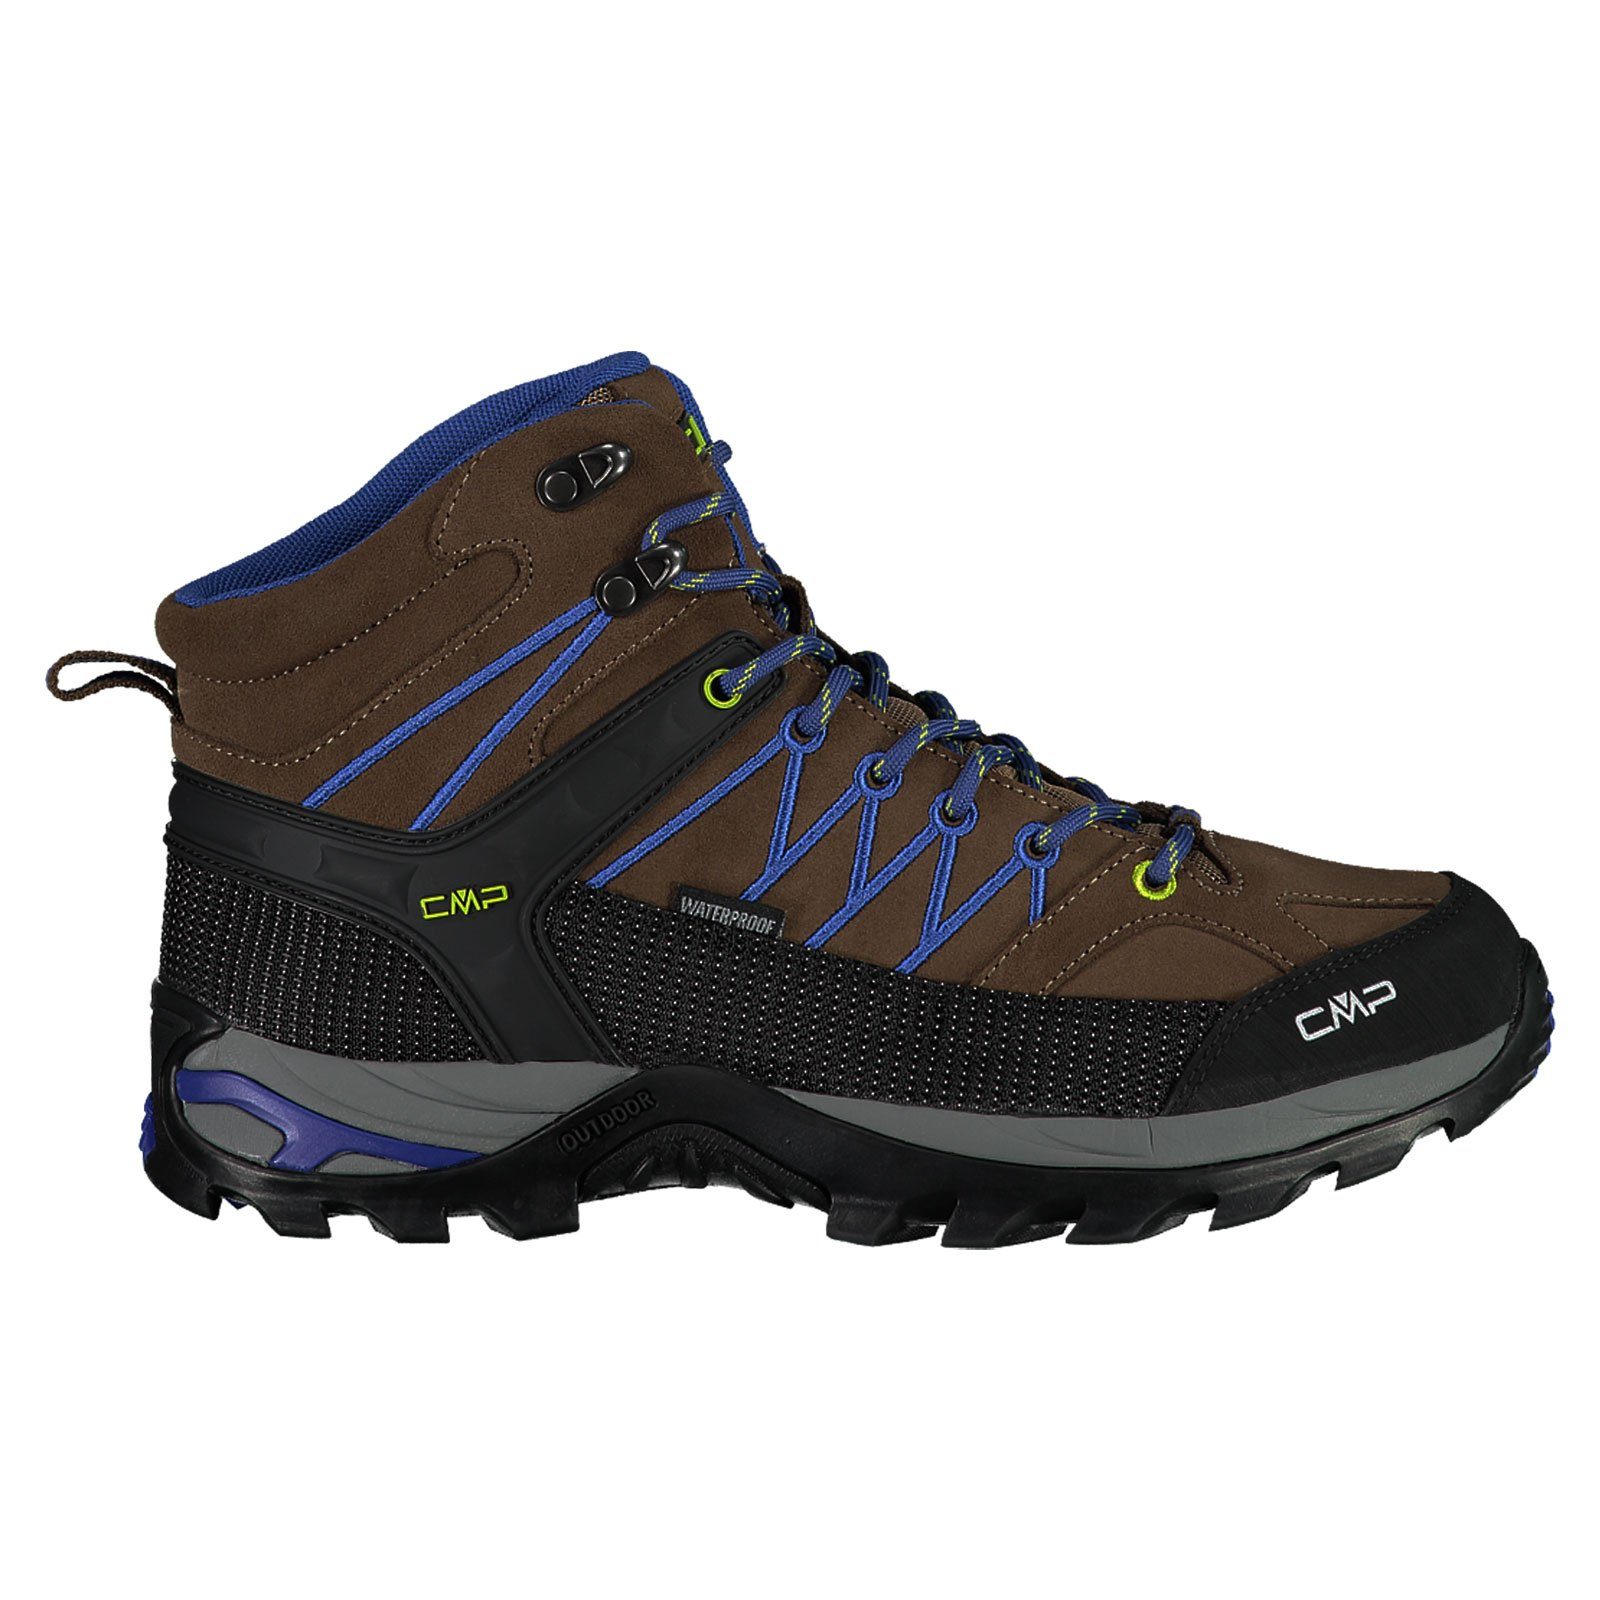 Clima Shoe electric WP Trekkingschuh mit 09PL Trekking Membran castoro CMP Protect® Rigel MID